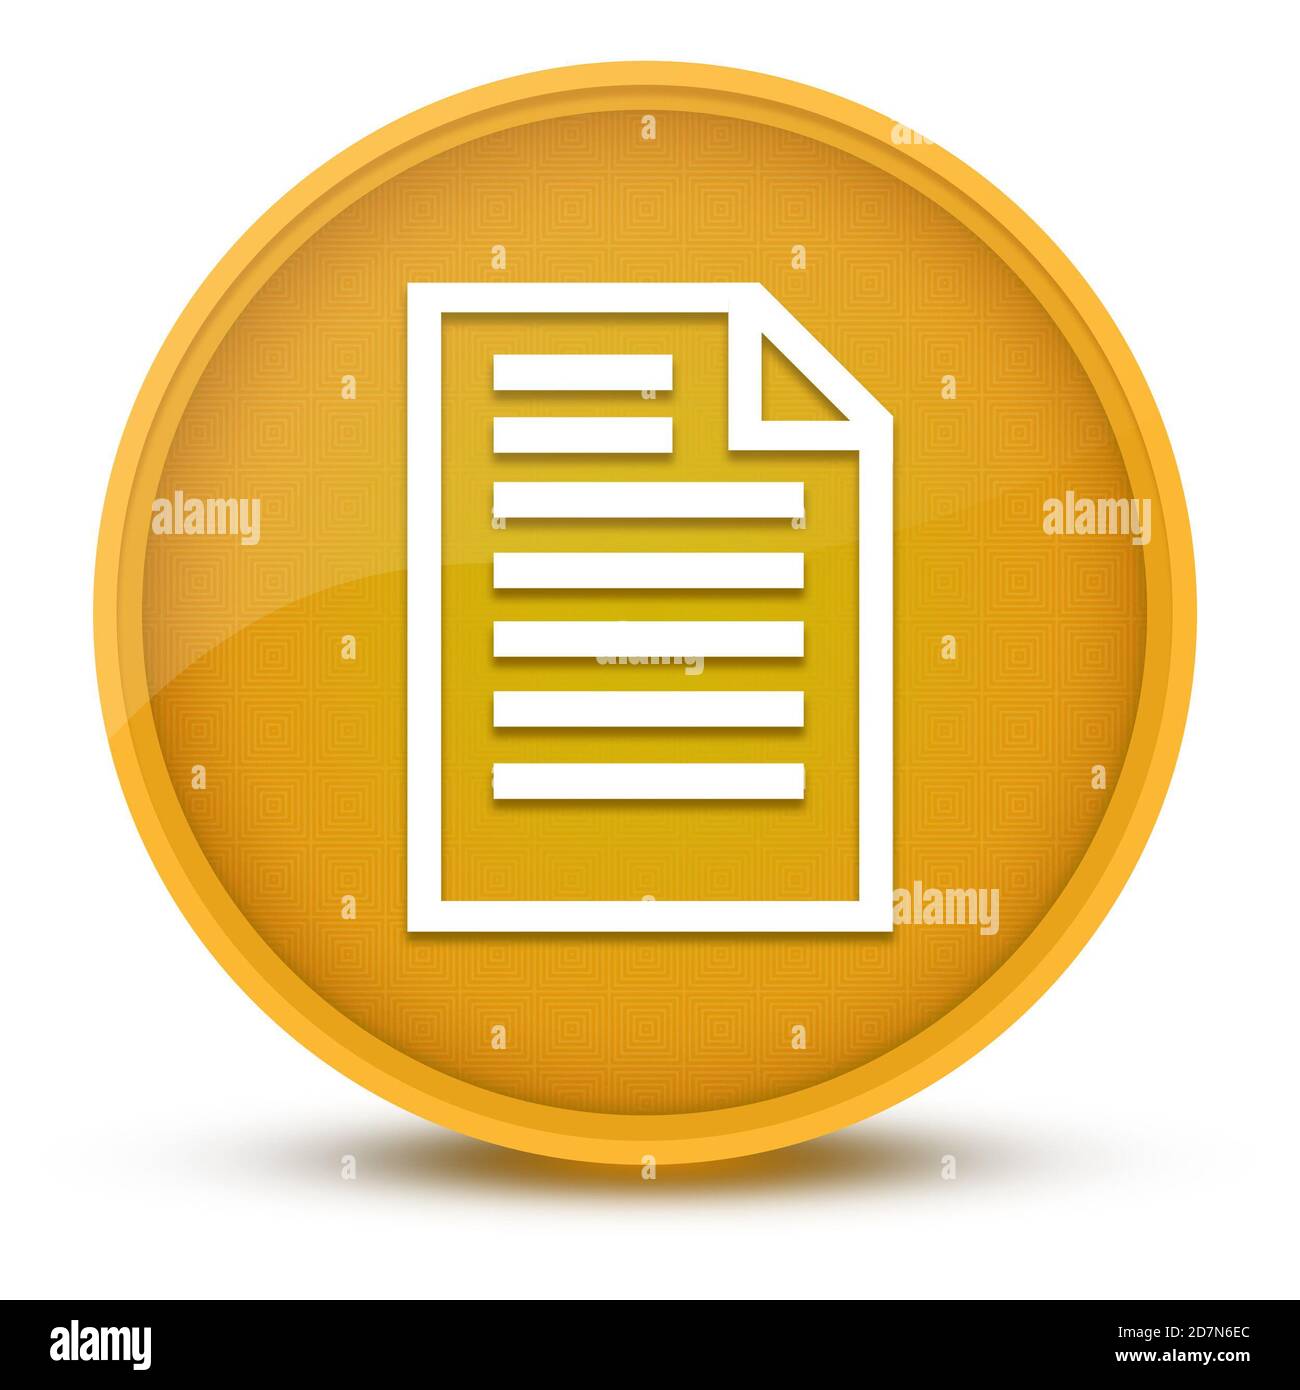 Zitat-Seite luxuriöse glänzende gelbe runde Knopf abstrakte Illustration Stockfoto